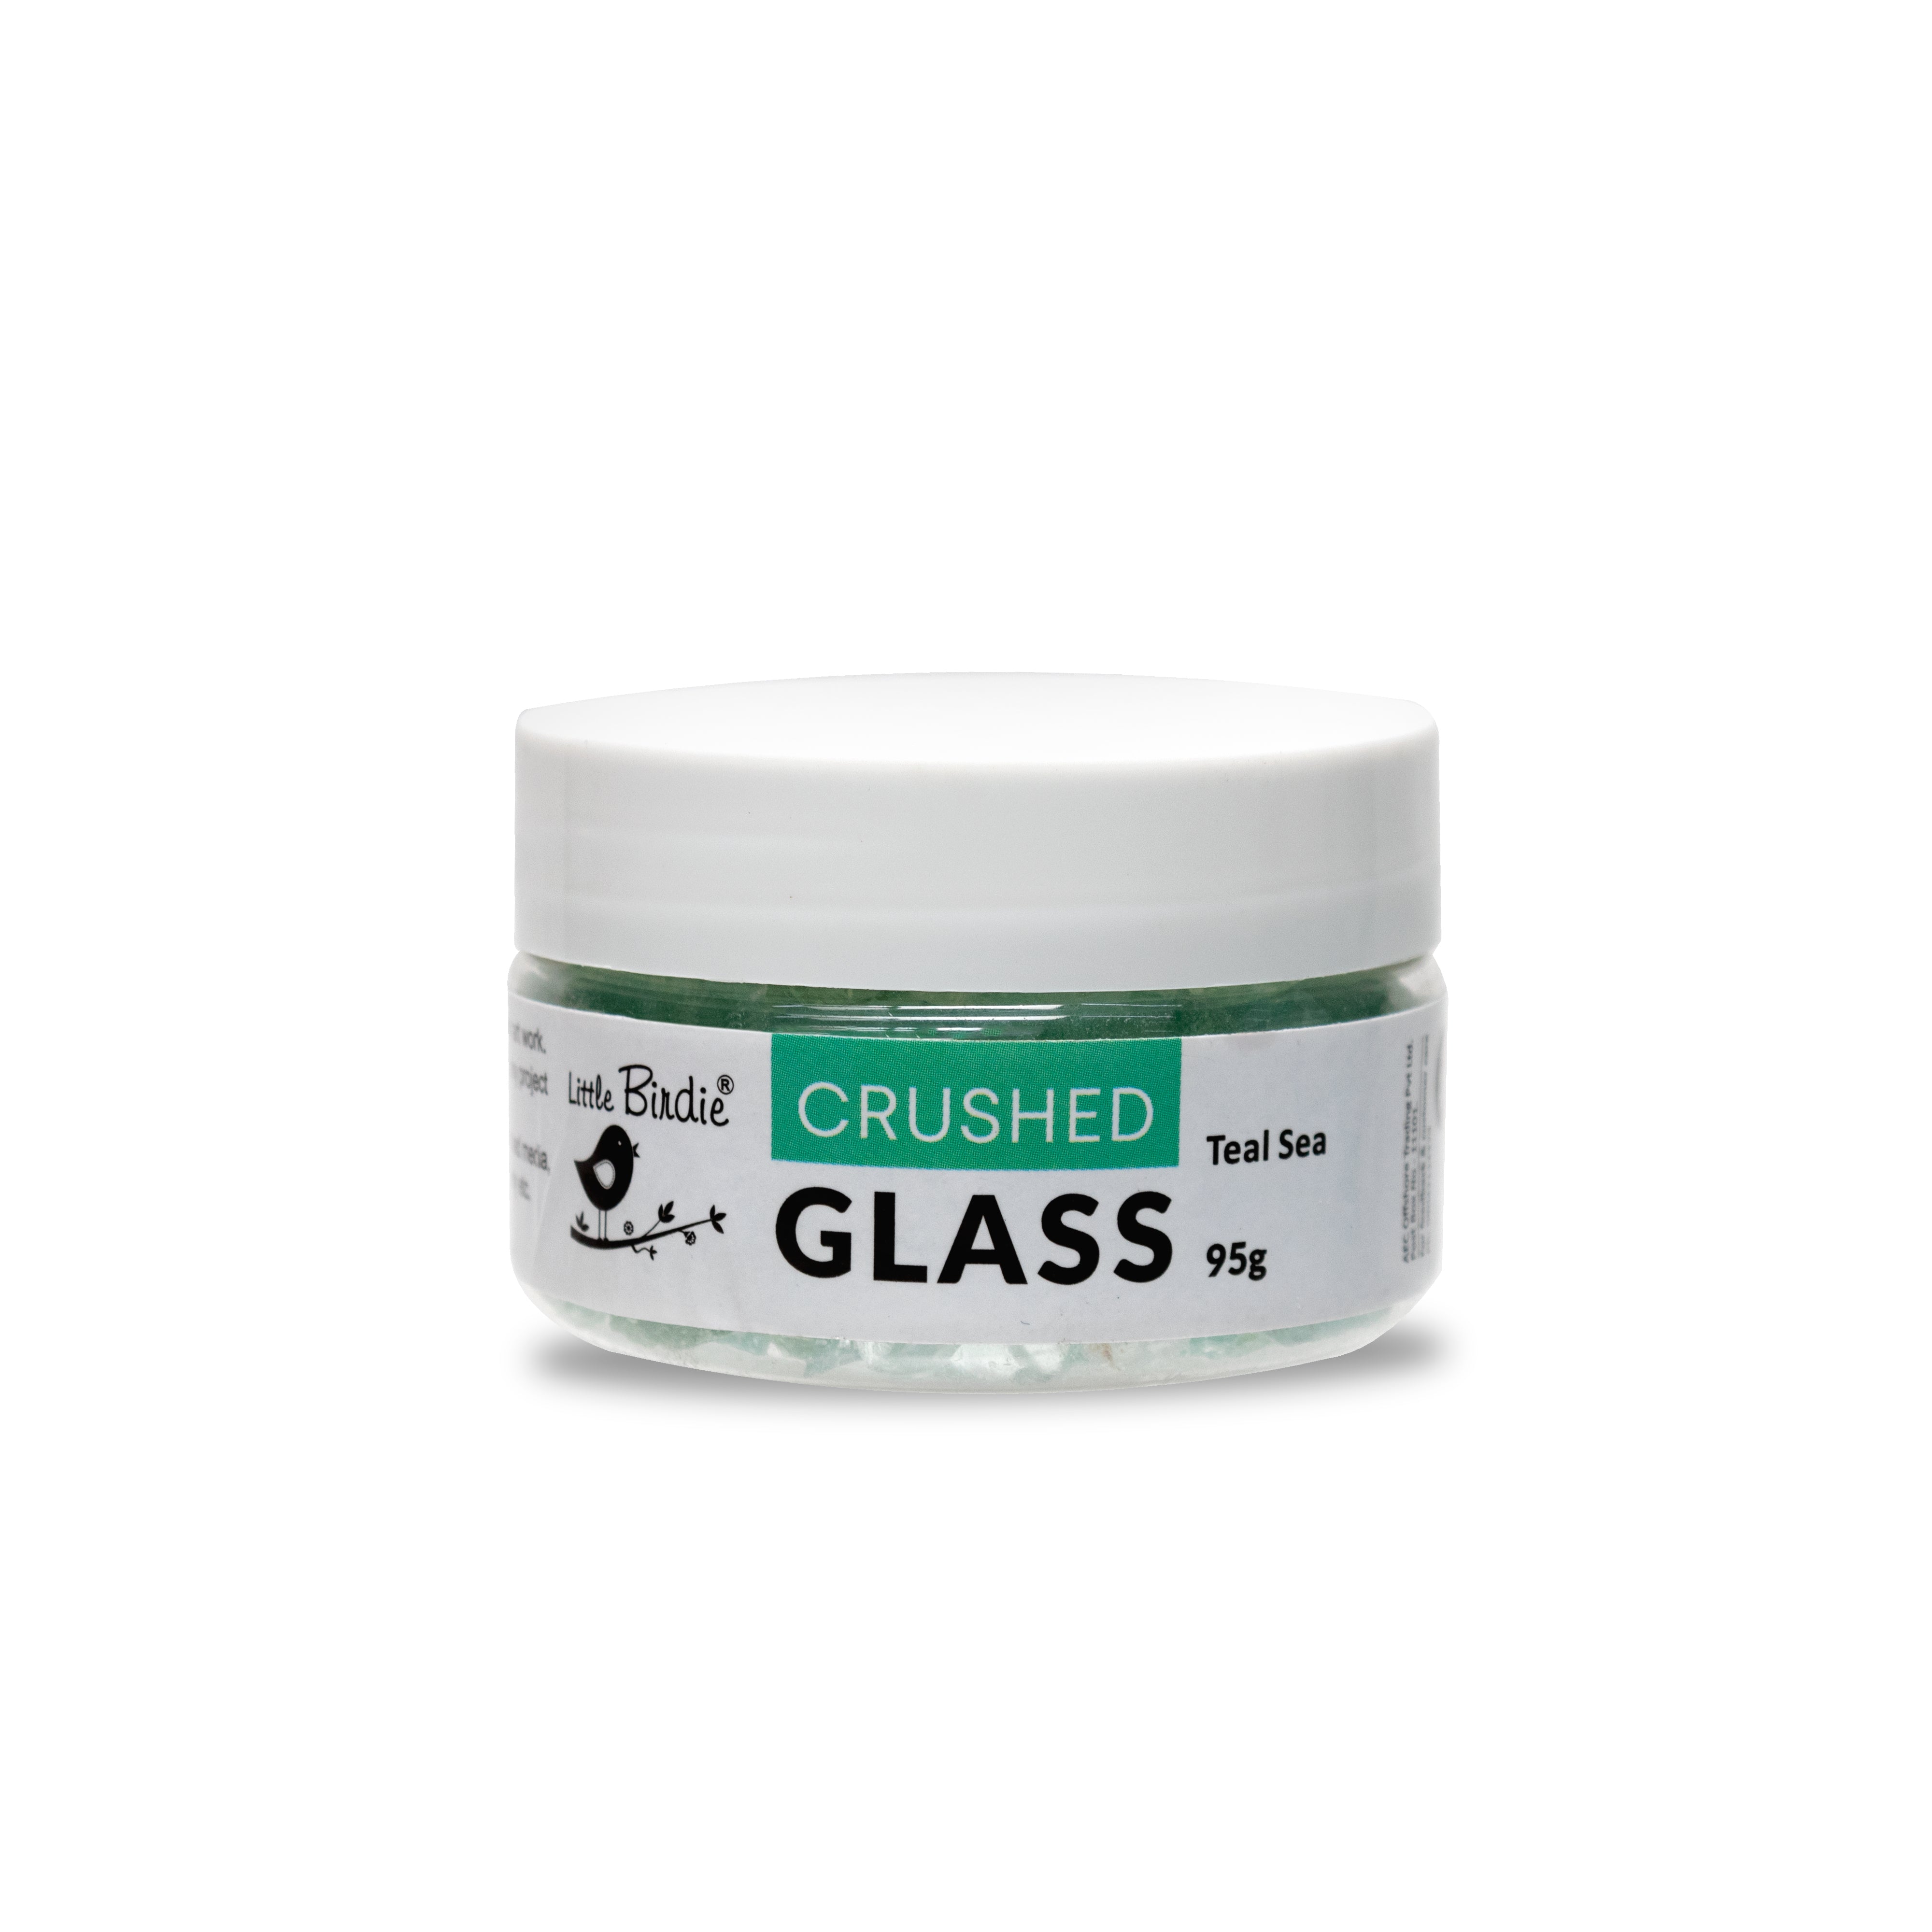 Crushed Glass Teal Sea 95G Bottle Lb